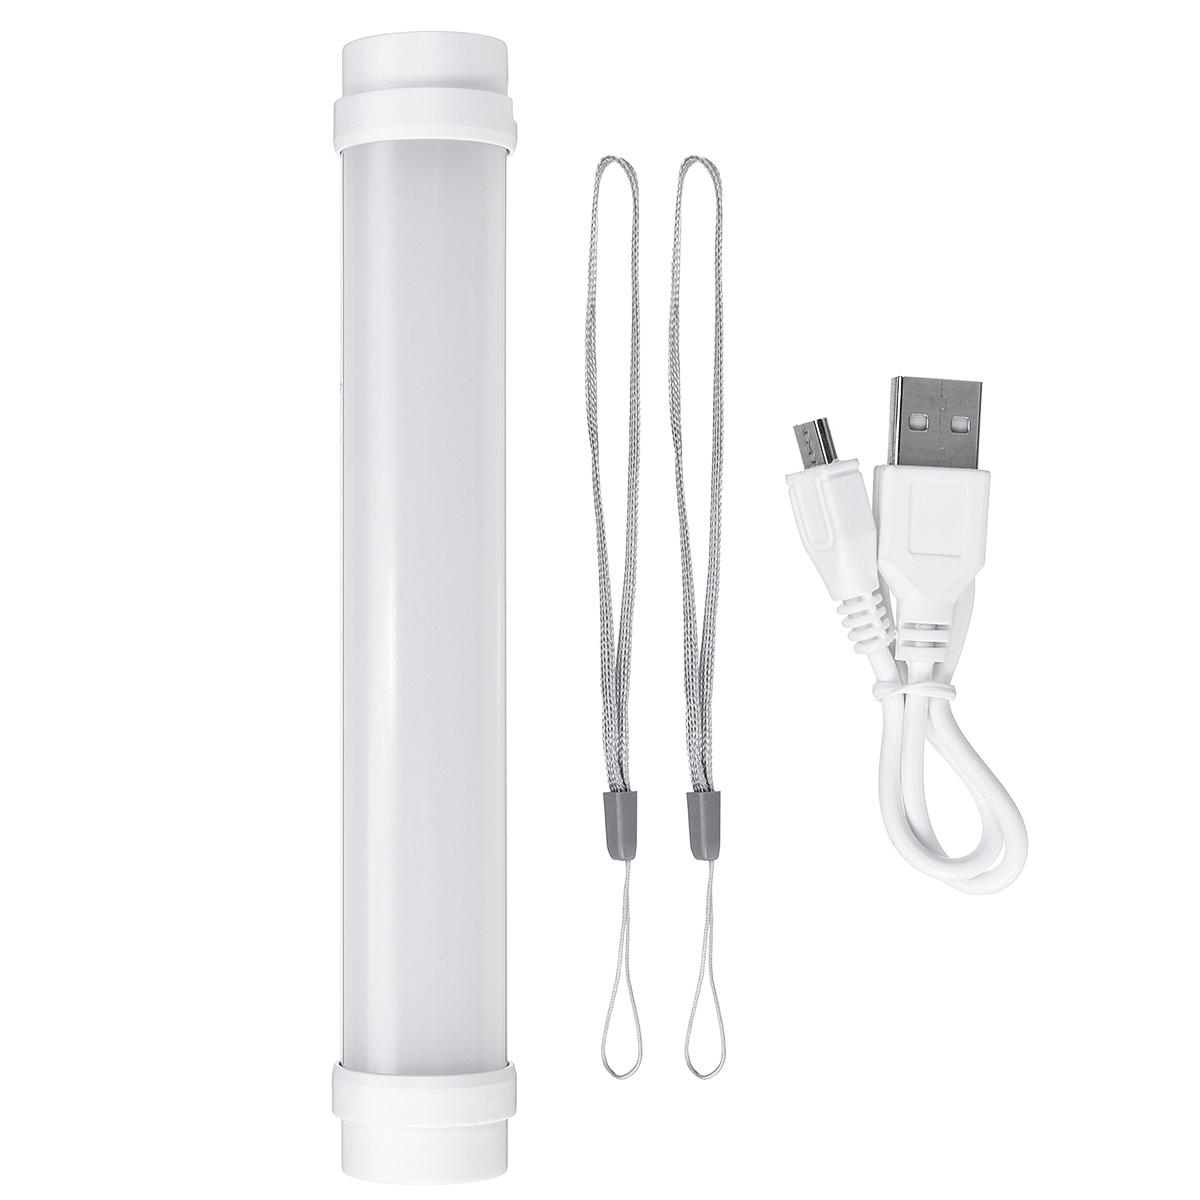 Lampada LED da tenda da campeggio all'aperto, tubo di emergenza a barra luminosa e caricatore USB power bank da 1800 mAh